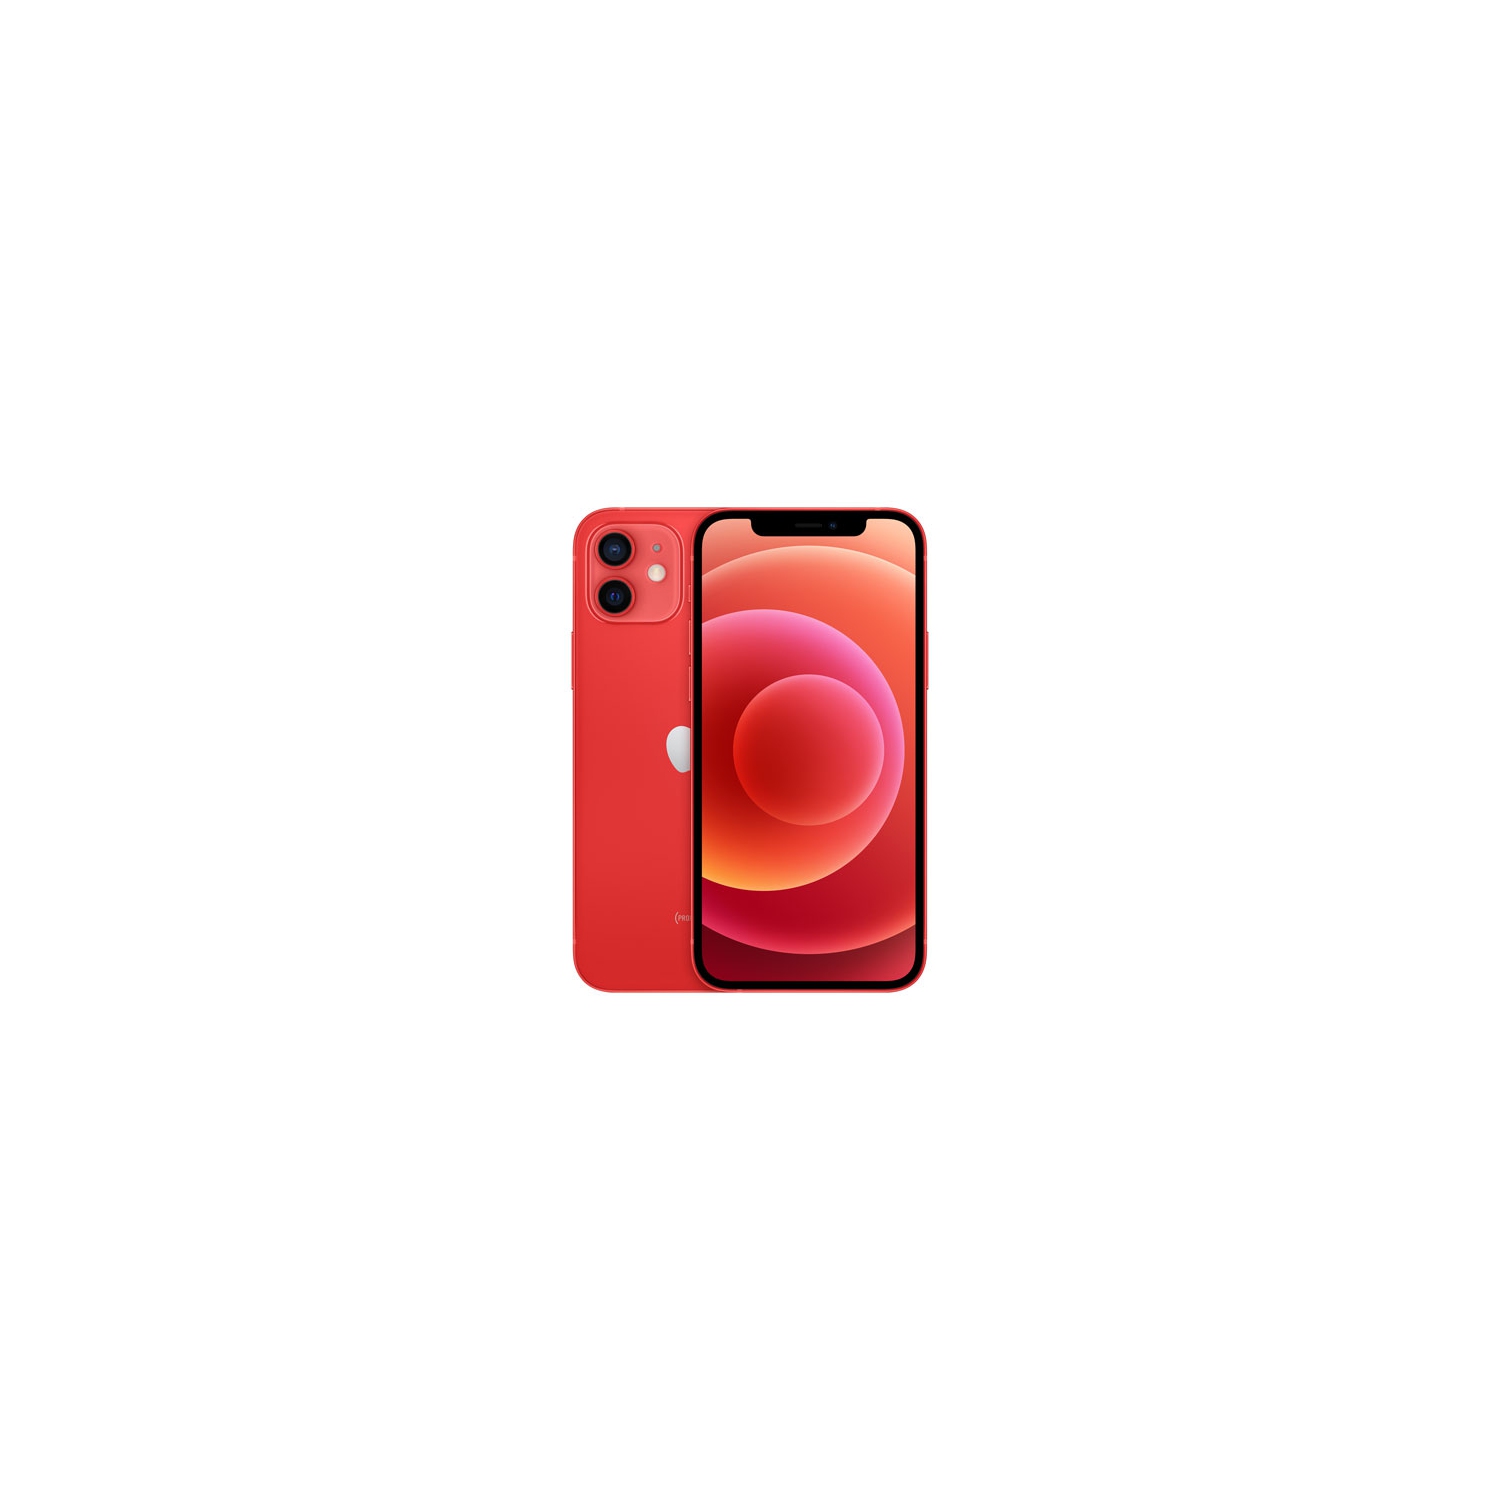 Refurbished (Good) - Apple iPhone 12 64GB Smartphone - (PRODUCT) RED - Unlocked